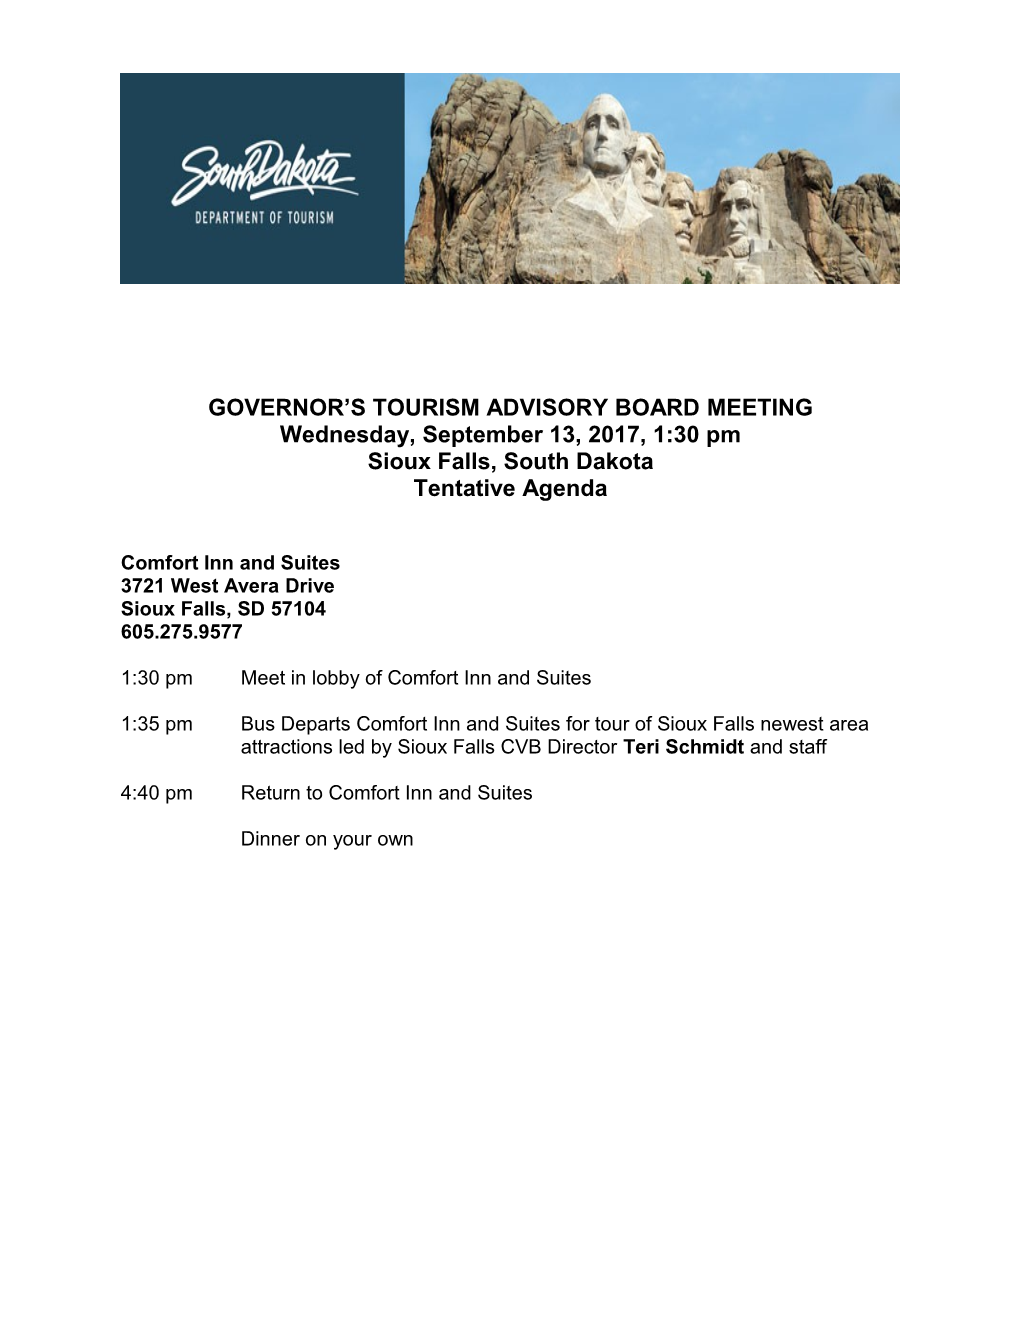 Governor S Tourism Advisory Board Meeting